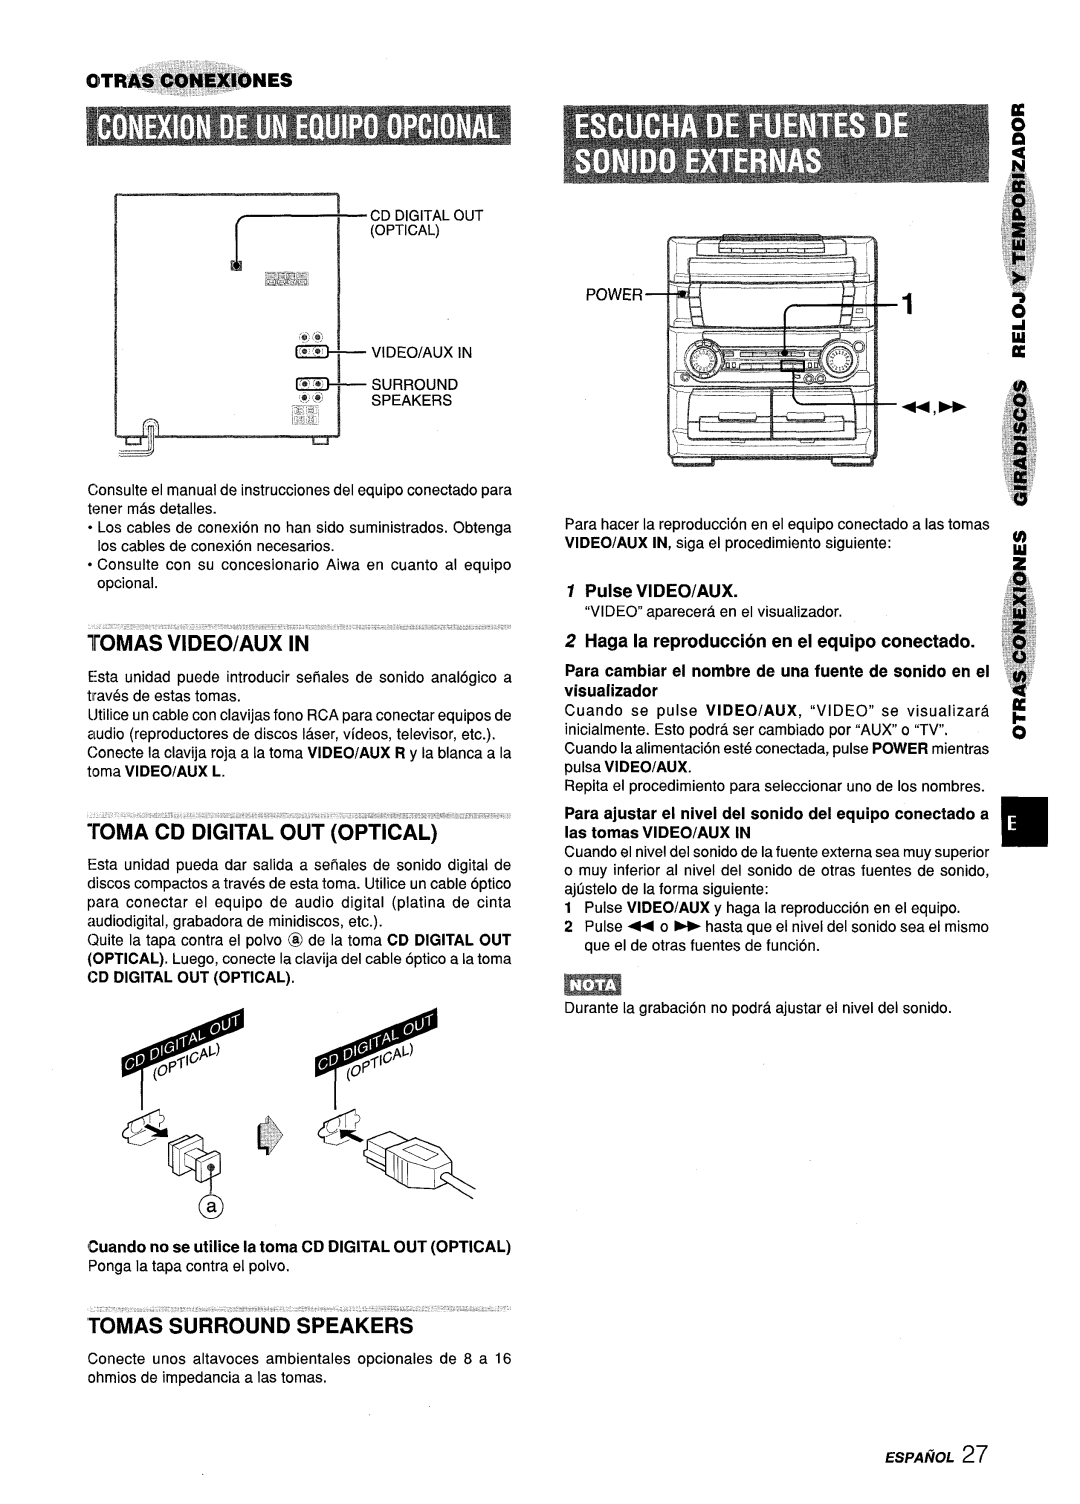 Aiwa Z-L70 manual Tomas Surround Speakers, Pulse VIDEO/AUX, ICuando no se utilice la toma CD DIGITAL OUT OPTICAL 